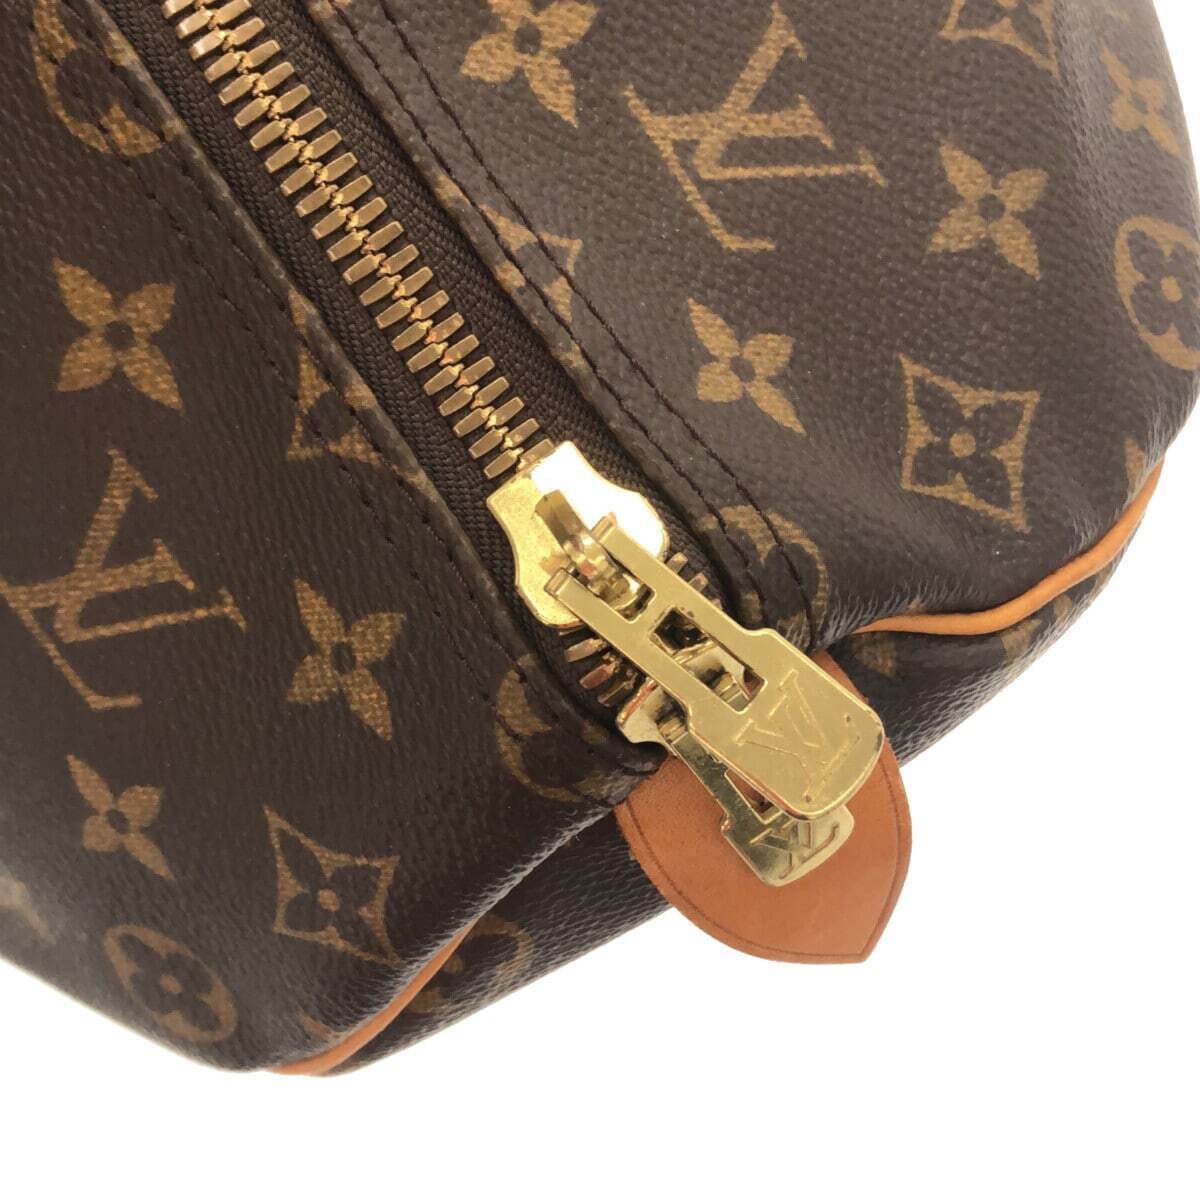 Louis Vuitton Sirius 55 Monogram Travel Bag on SALE